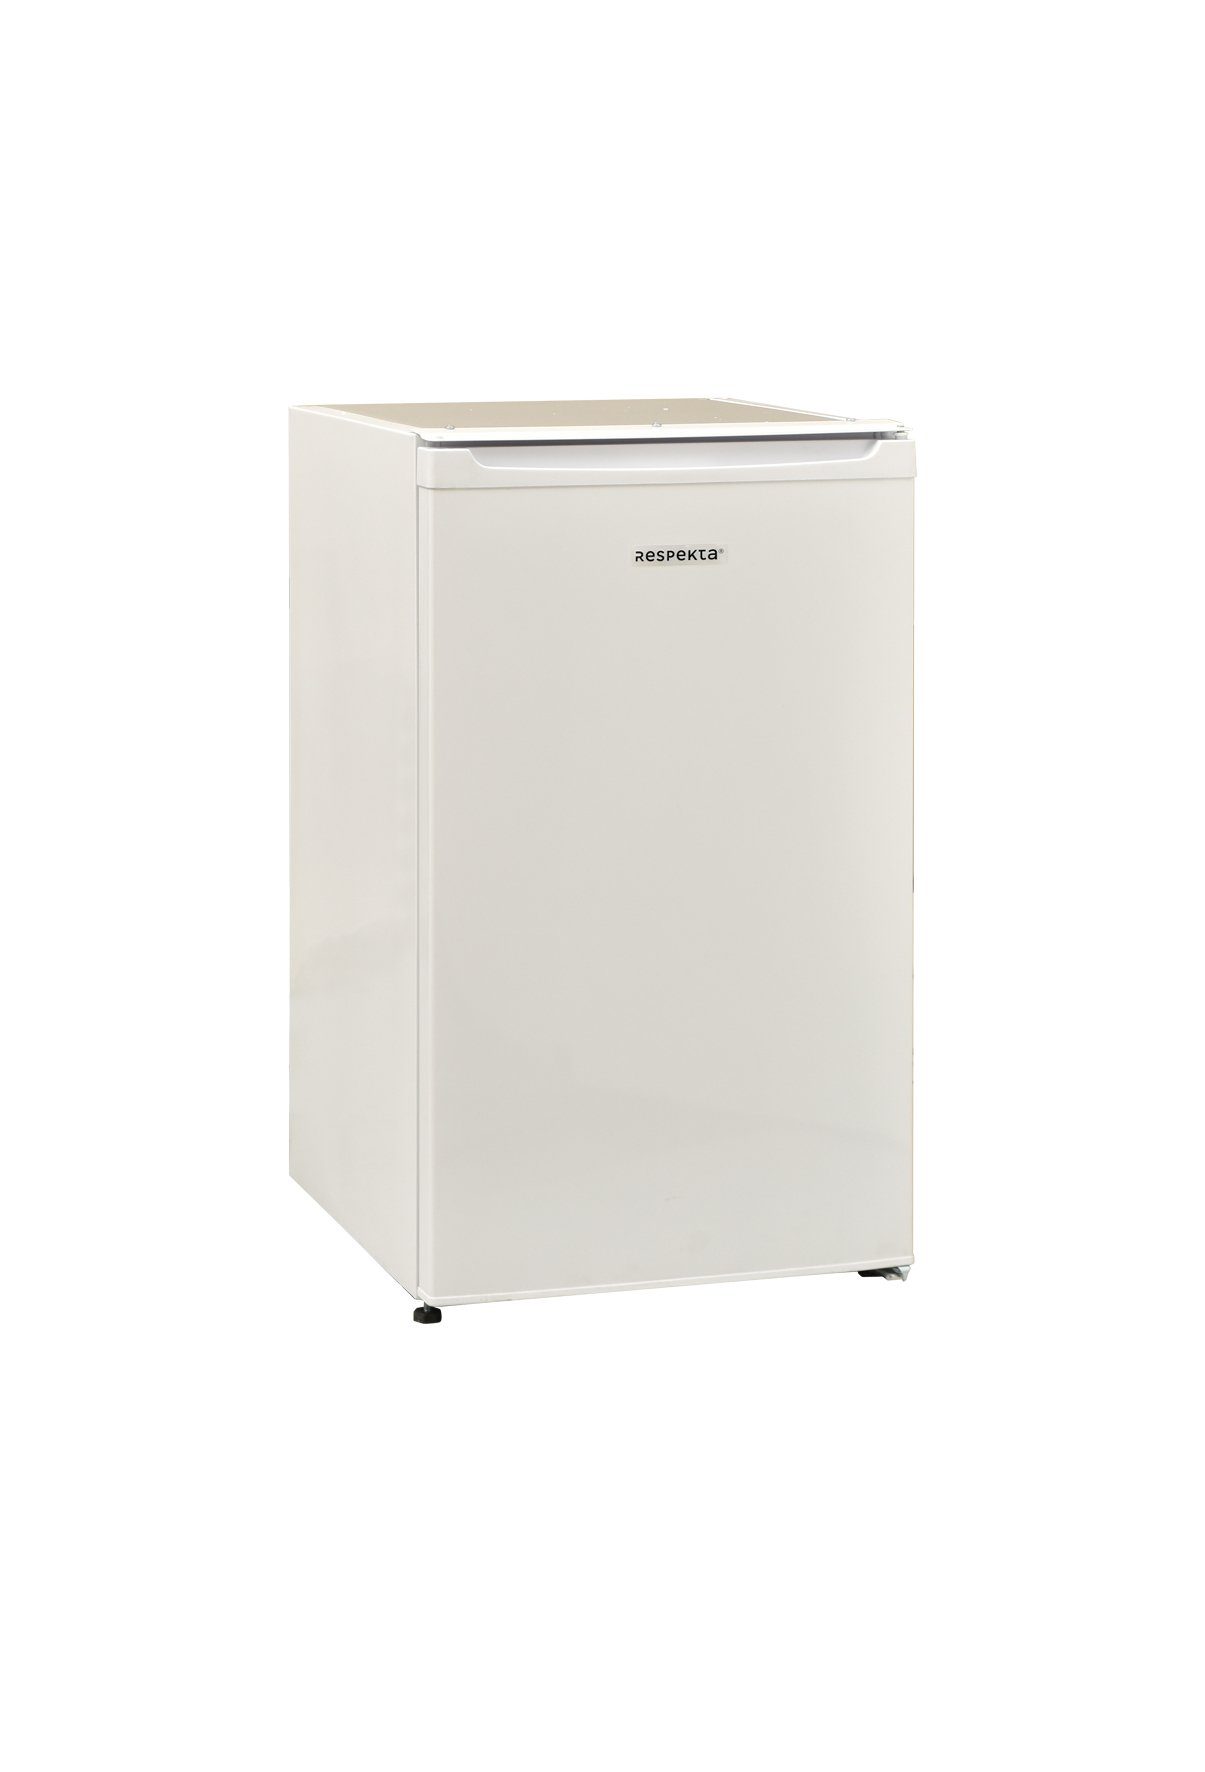 RESPEKTA Kühlschrank Unterbaufähig mit KSU50 Gefrierfach